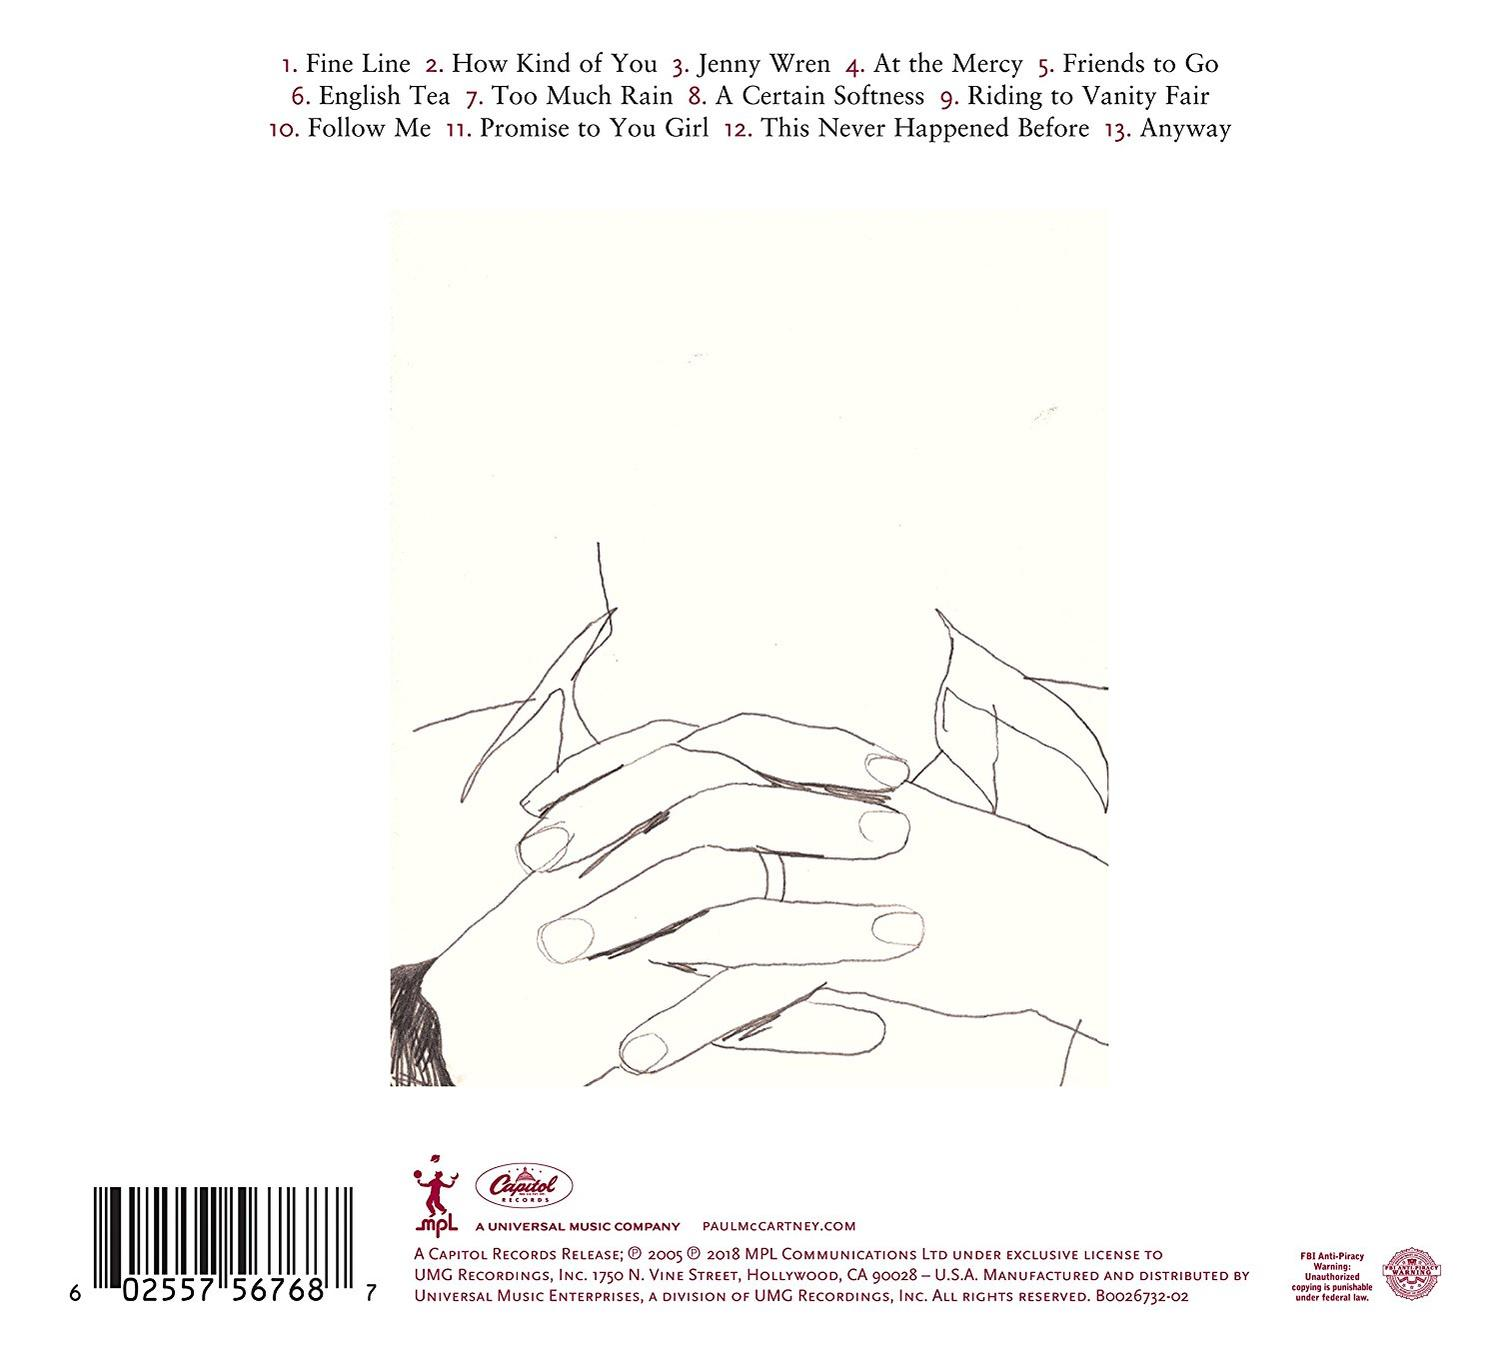 Paul McCartney Creation - (CD) The Backyard In Chaos (CD) - And